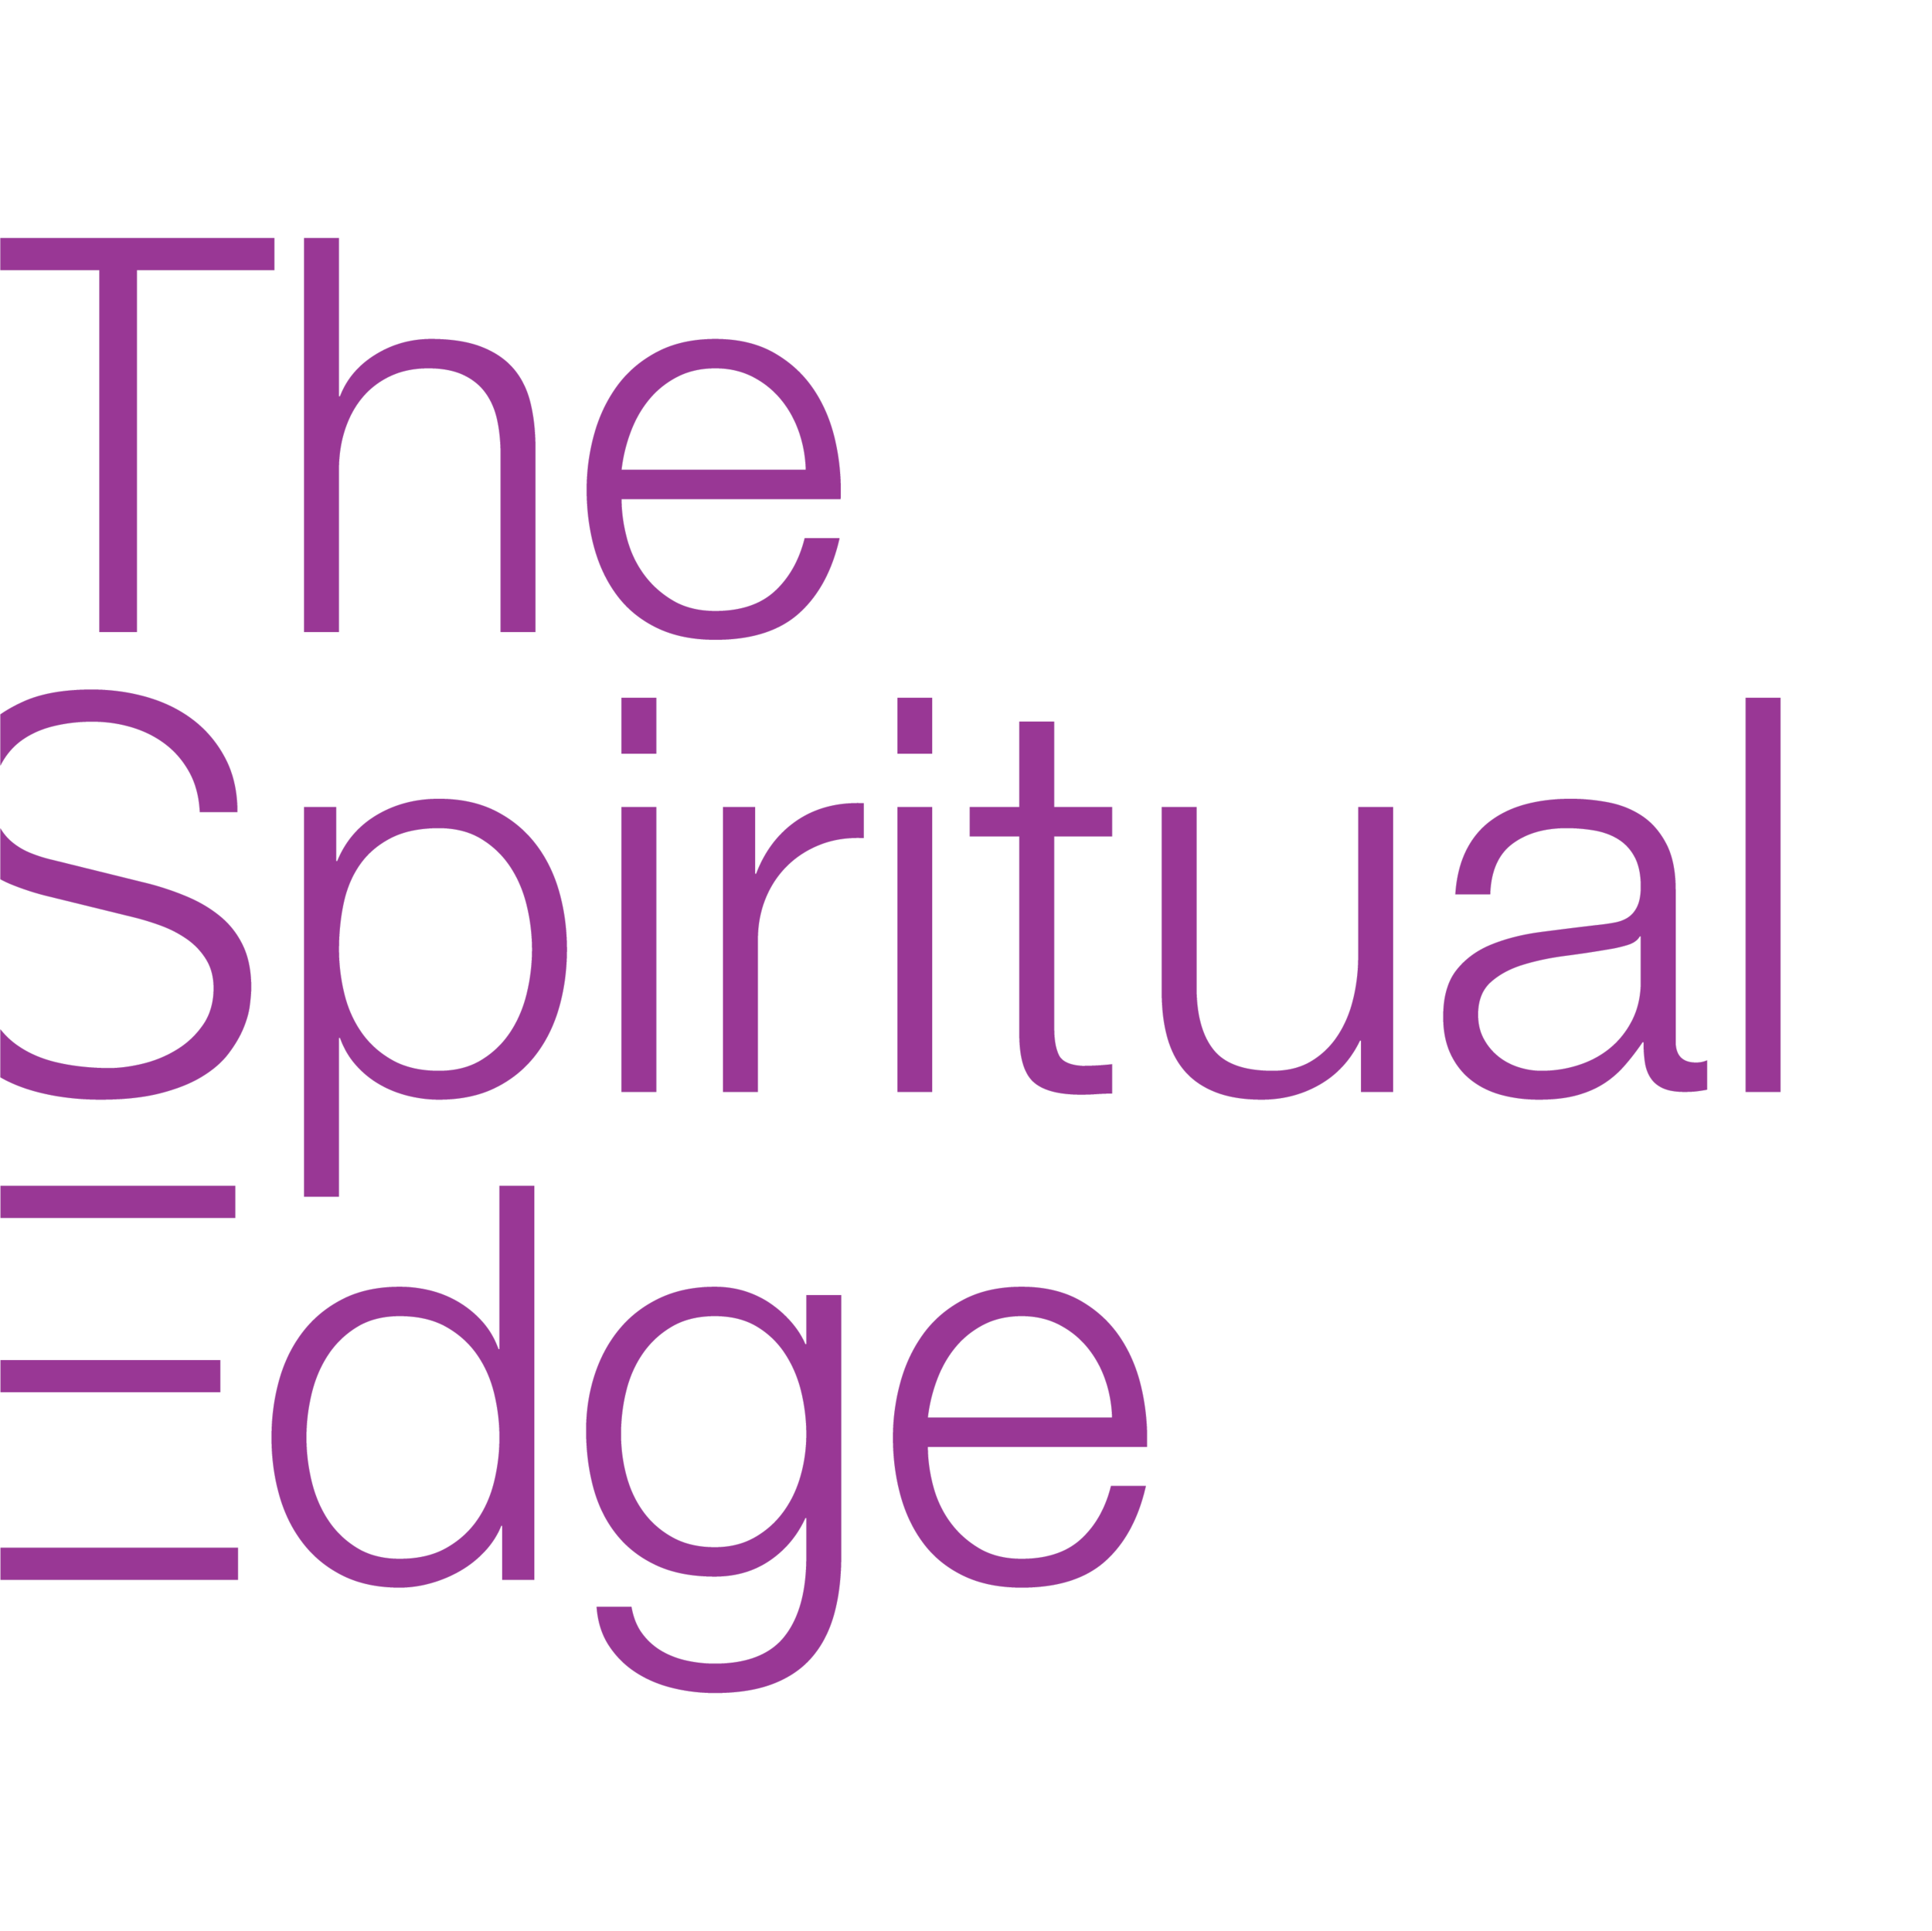 The Spiritual Edge podcast